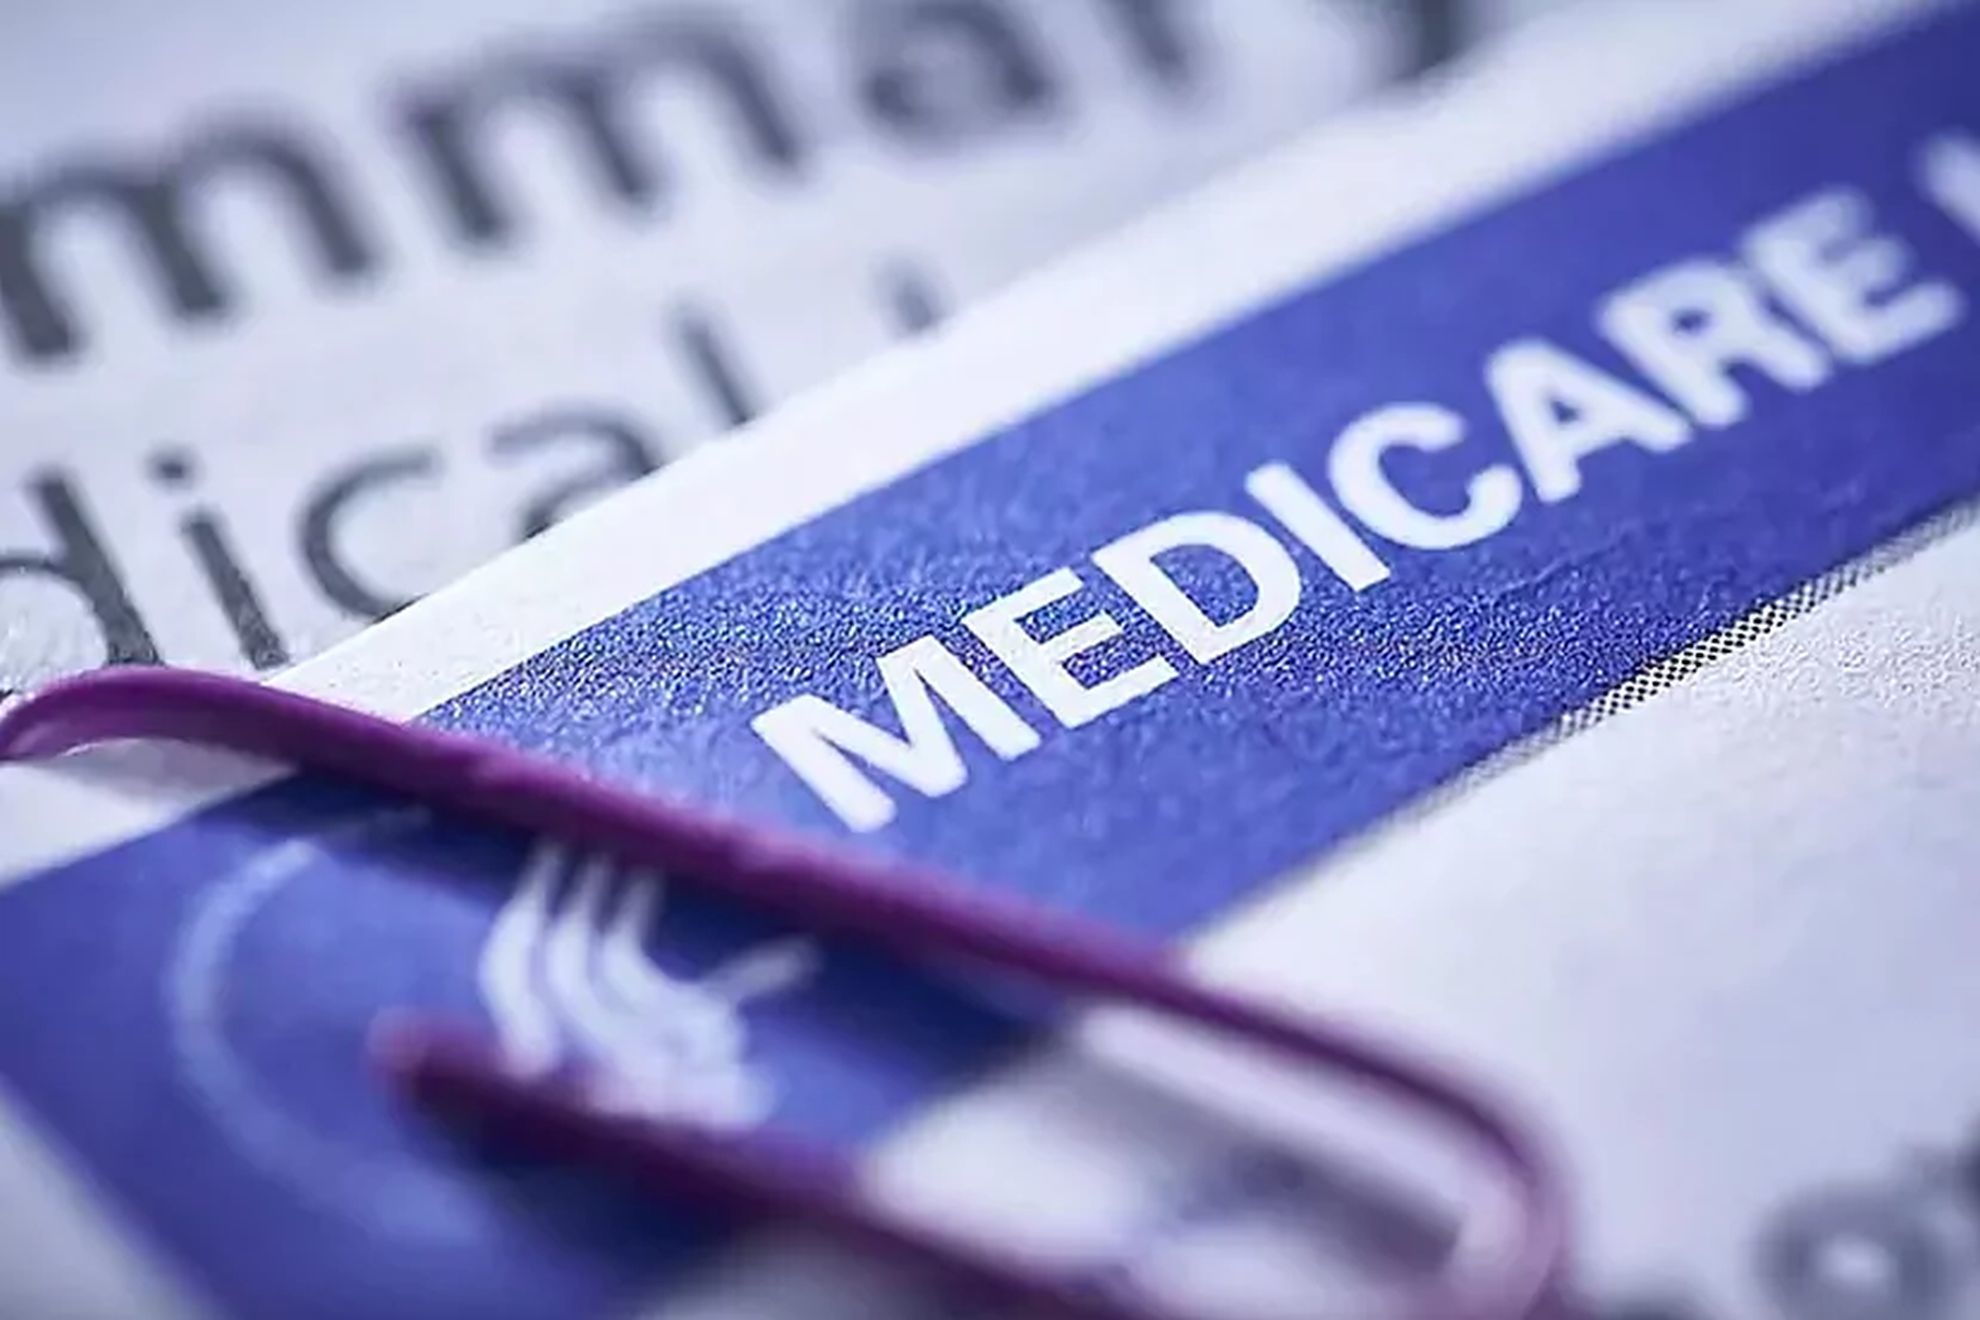 Medicare Latest Medicare News, Status & Updates